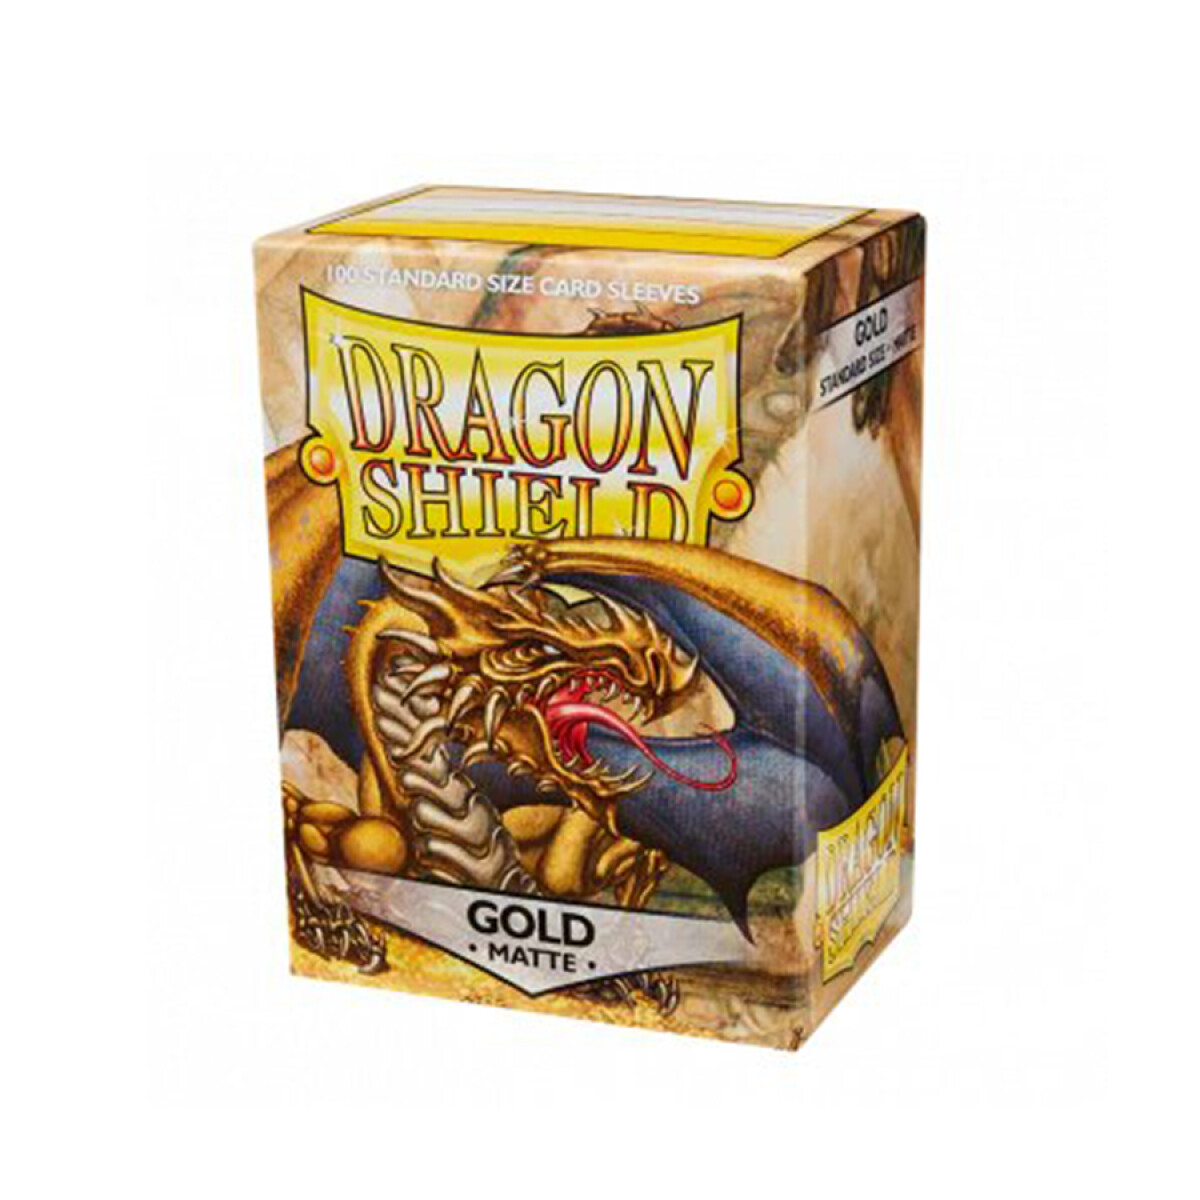 Dragon Shield Gold Mate 100 Sleeves 